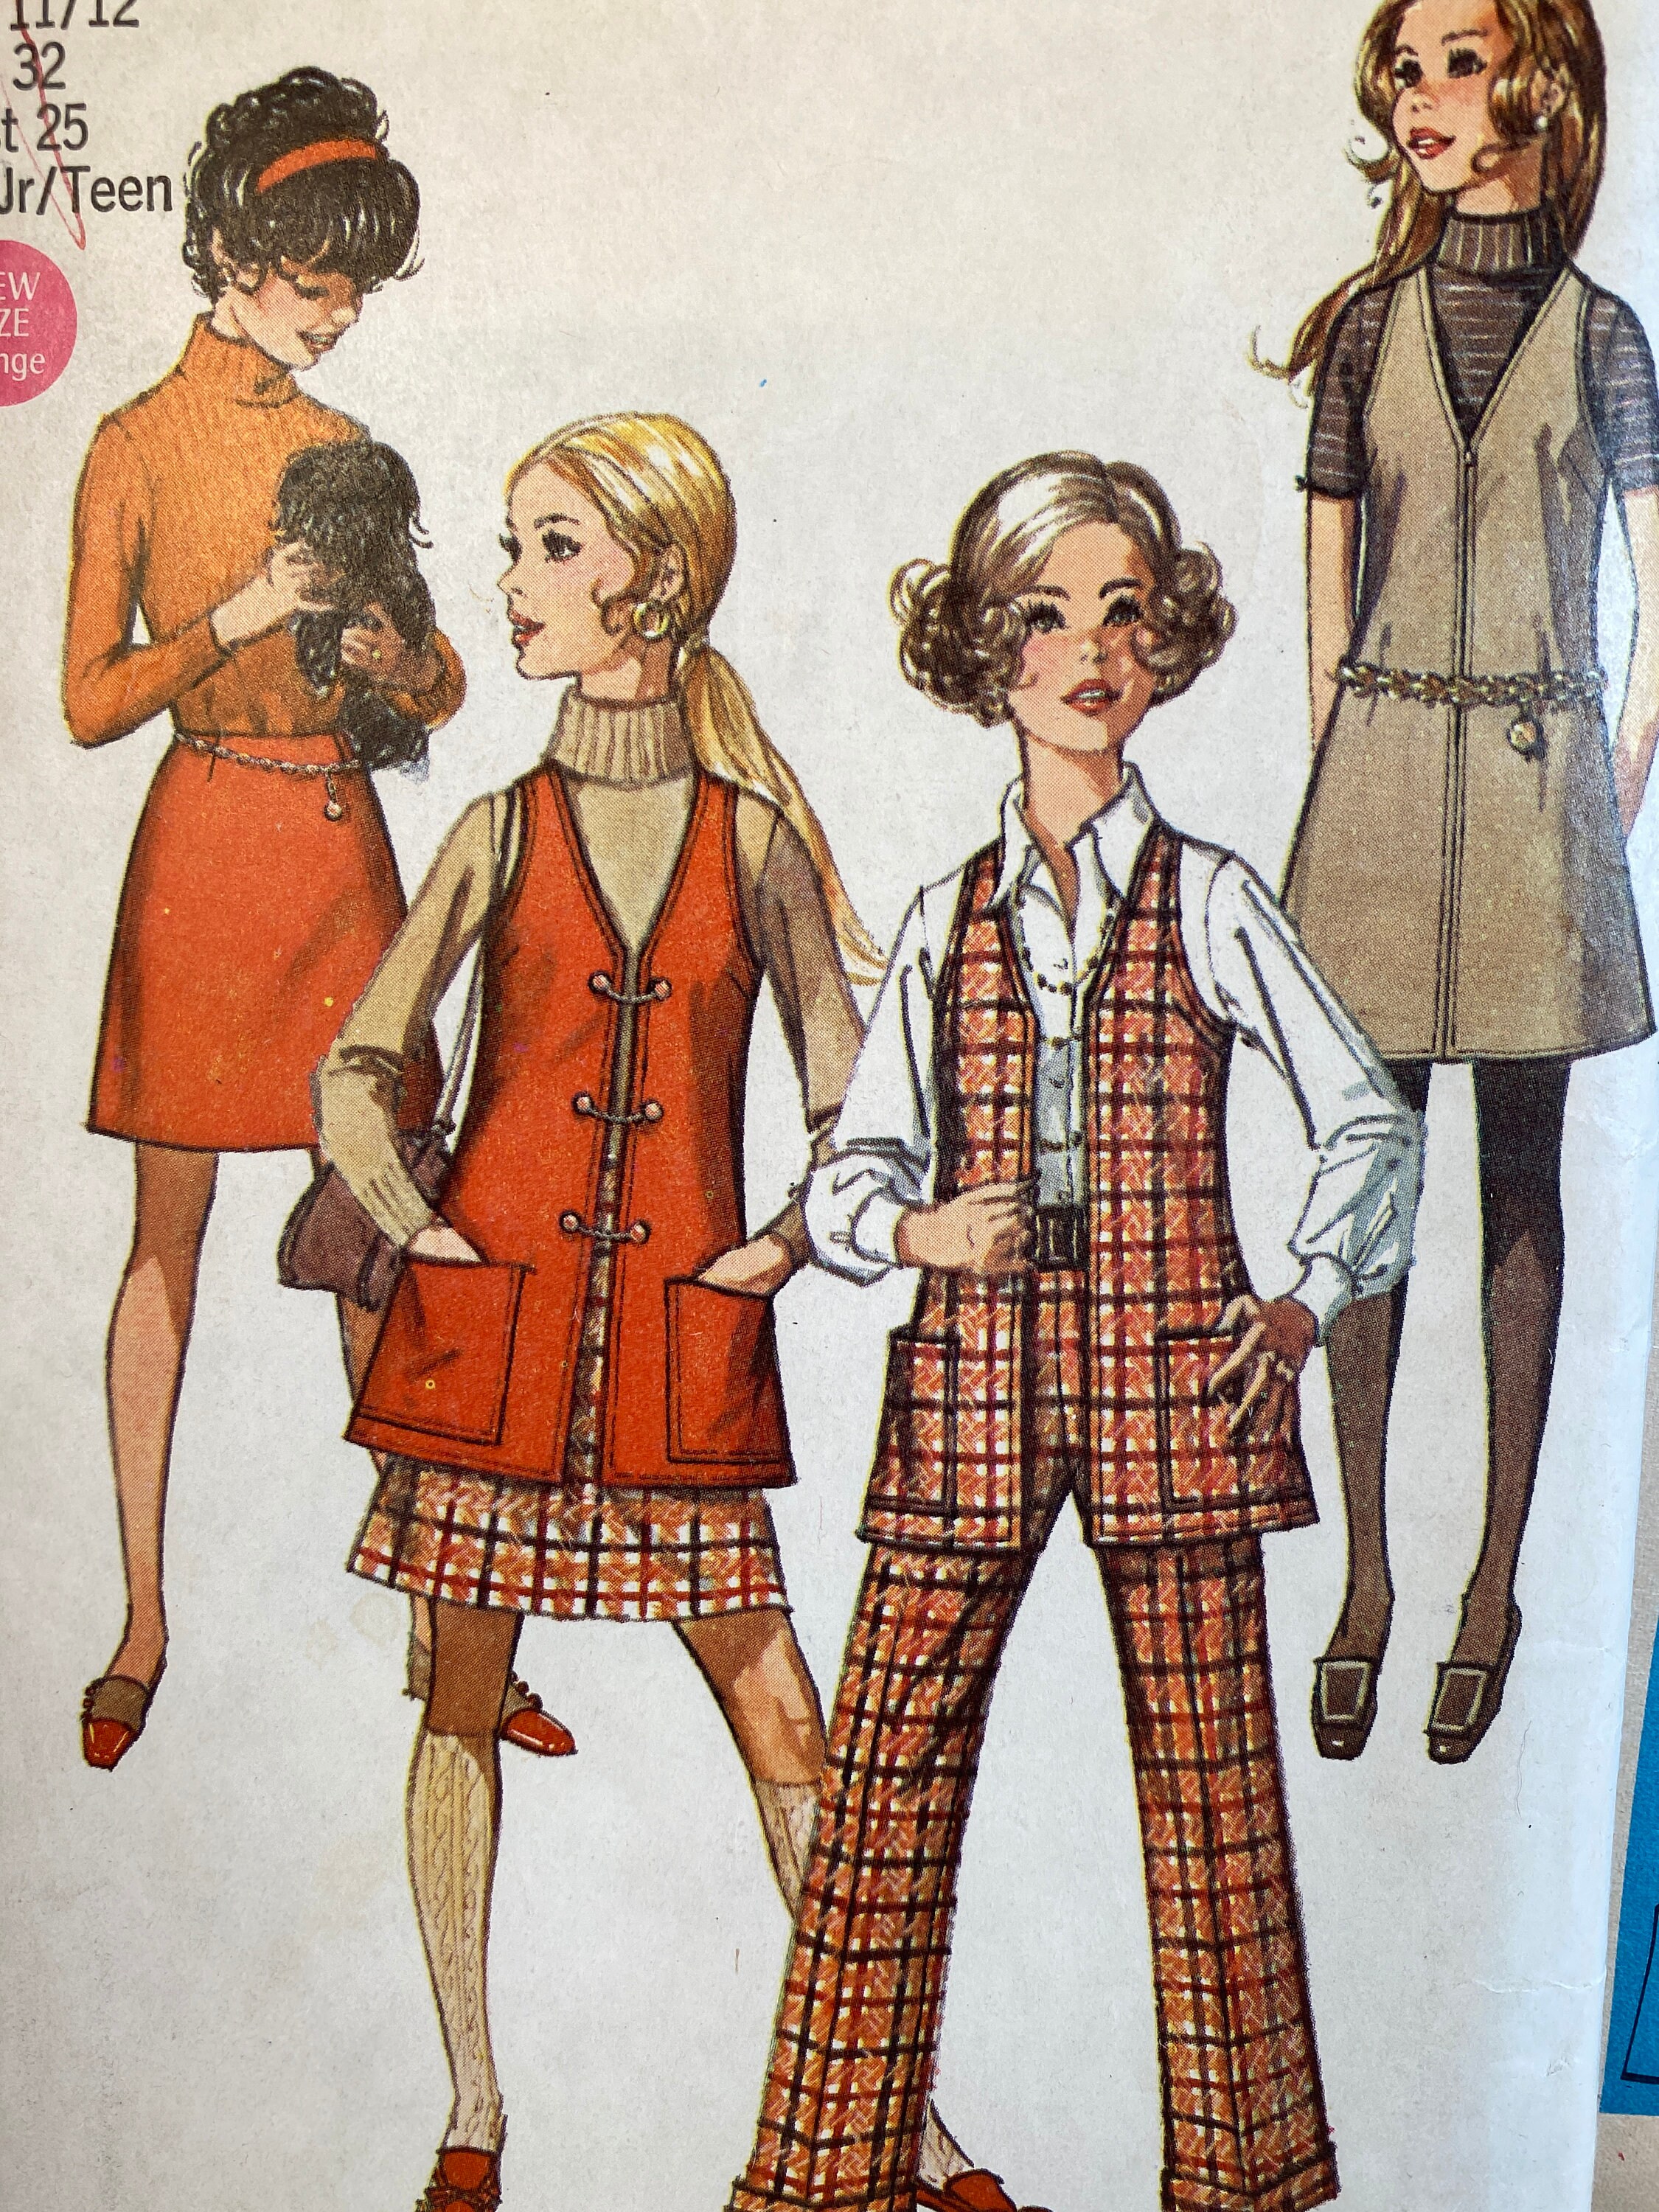 1970s Simplicity 8947 Vintage Sewing Pattern Girls Mini Skirt